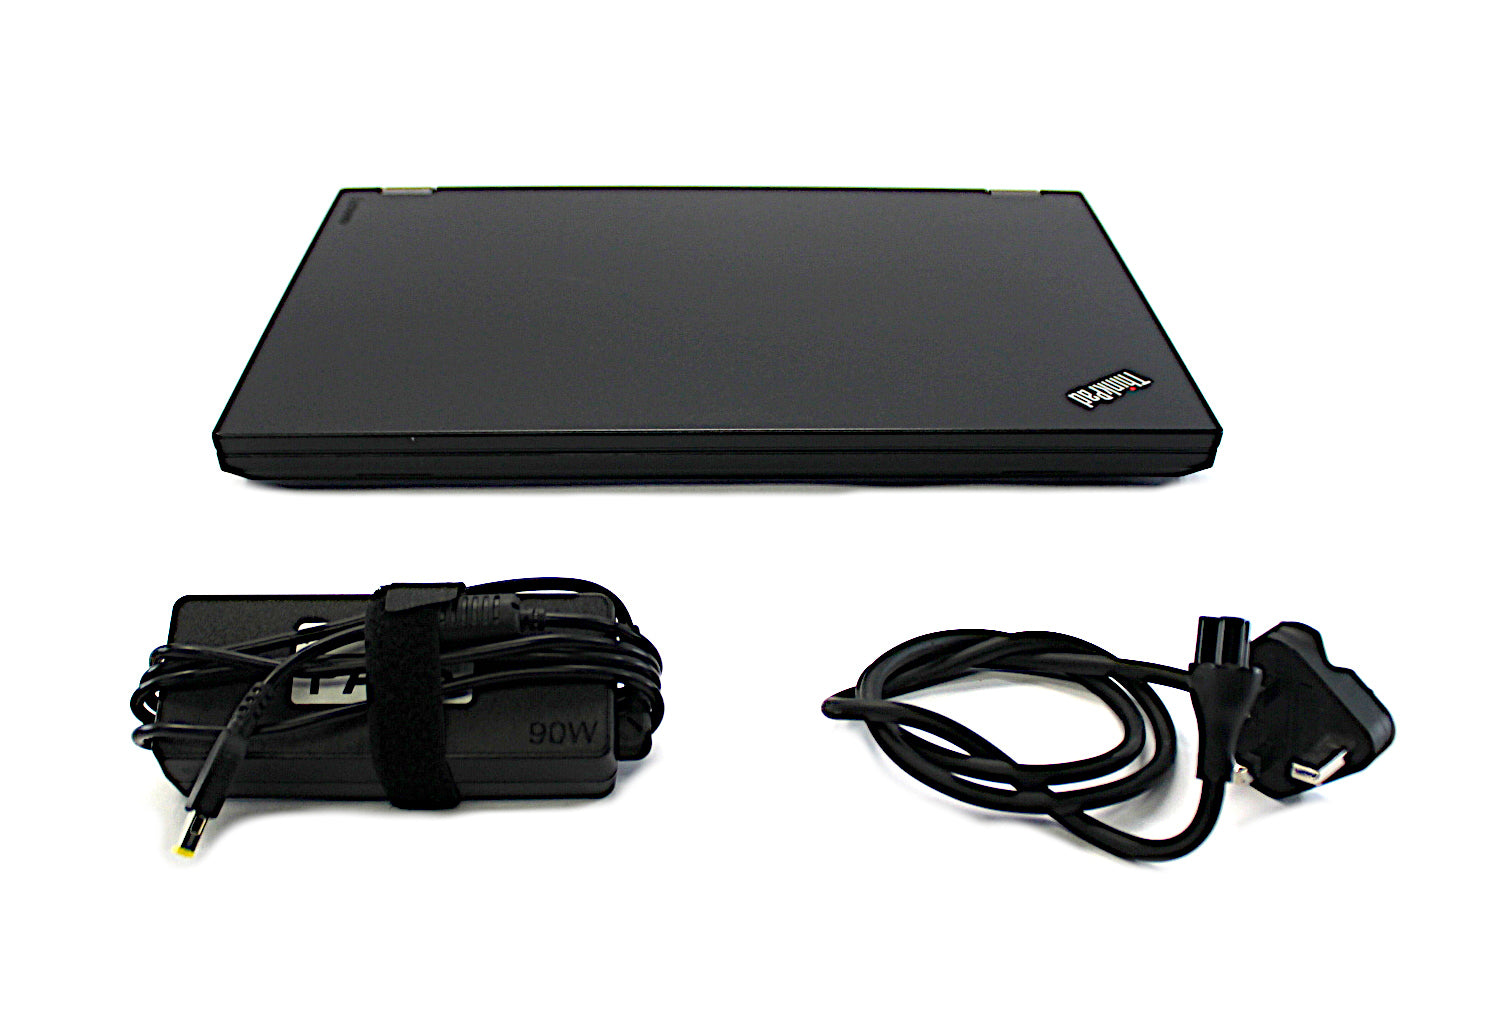 Lenovo ThinkPad L570 Laptop, 15.6" i5 7th Gen, 8GB RAM, 256GB SSD